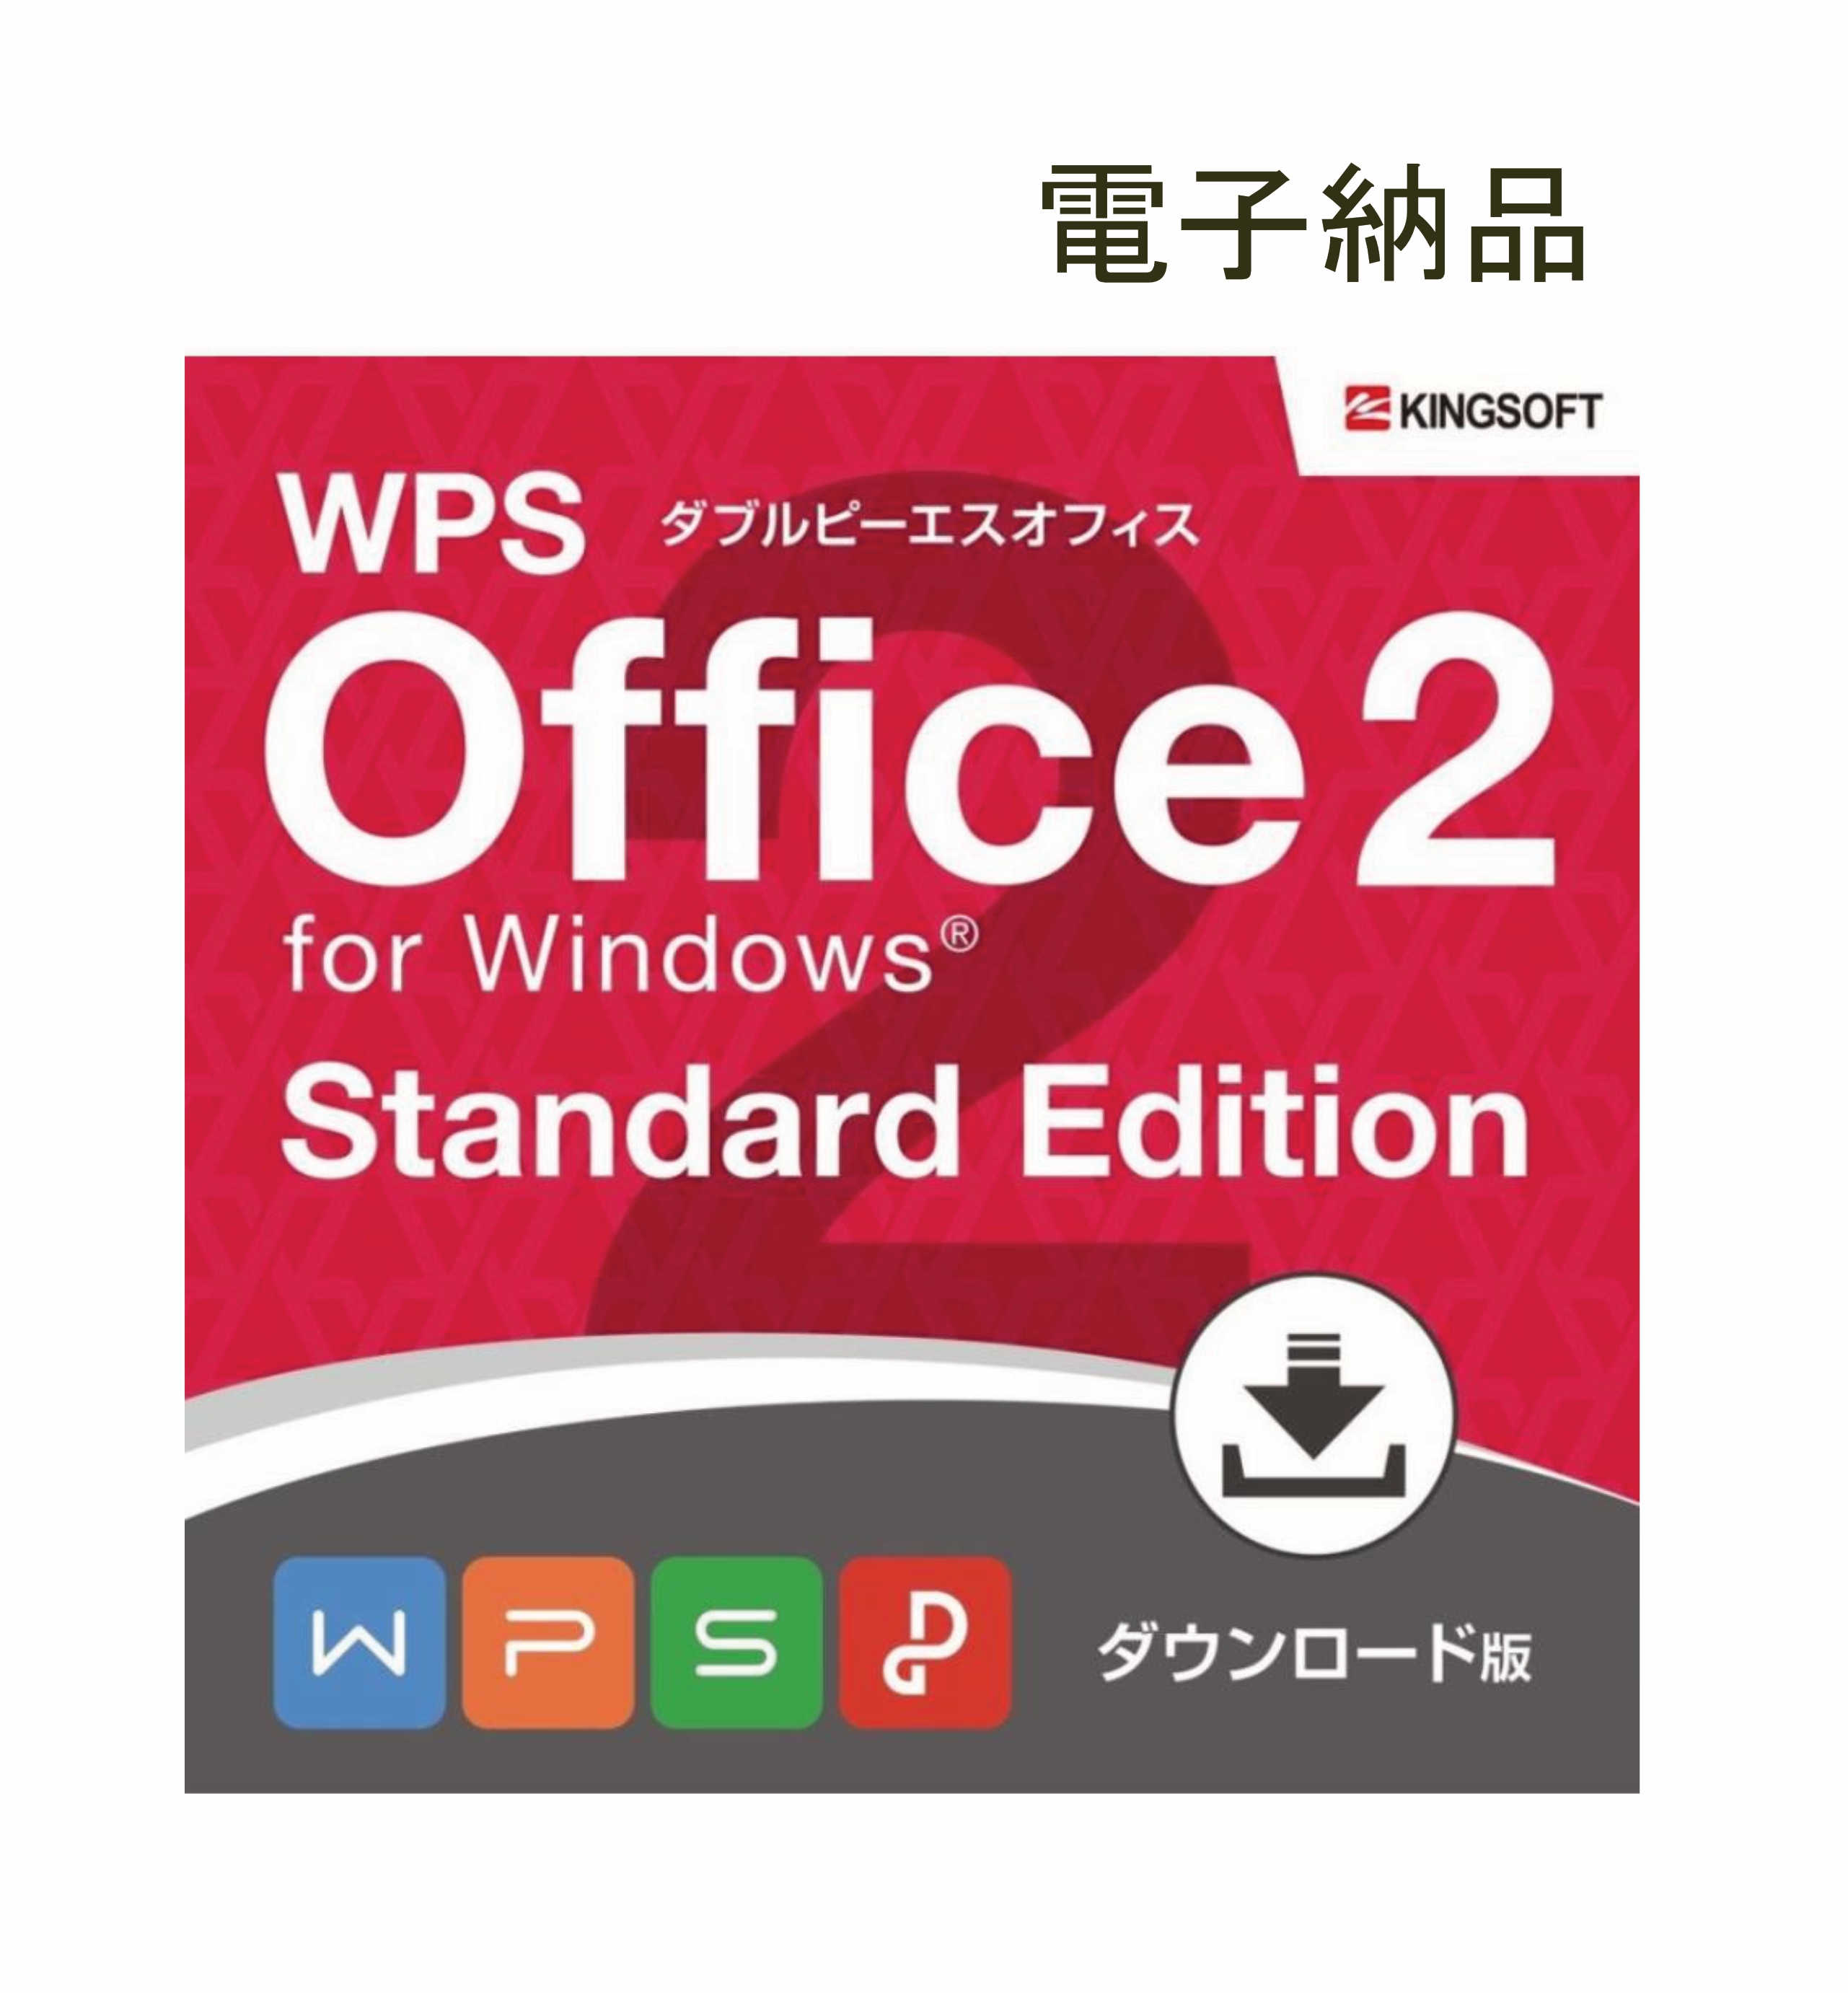  King soft Kingsoft WPS Office 2 for Windows Standard Edition download version (A)